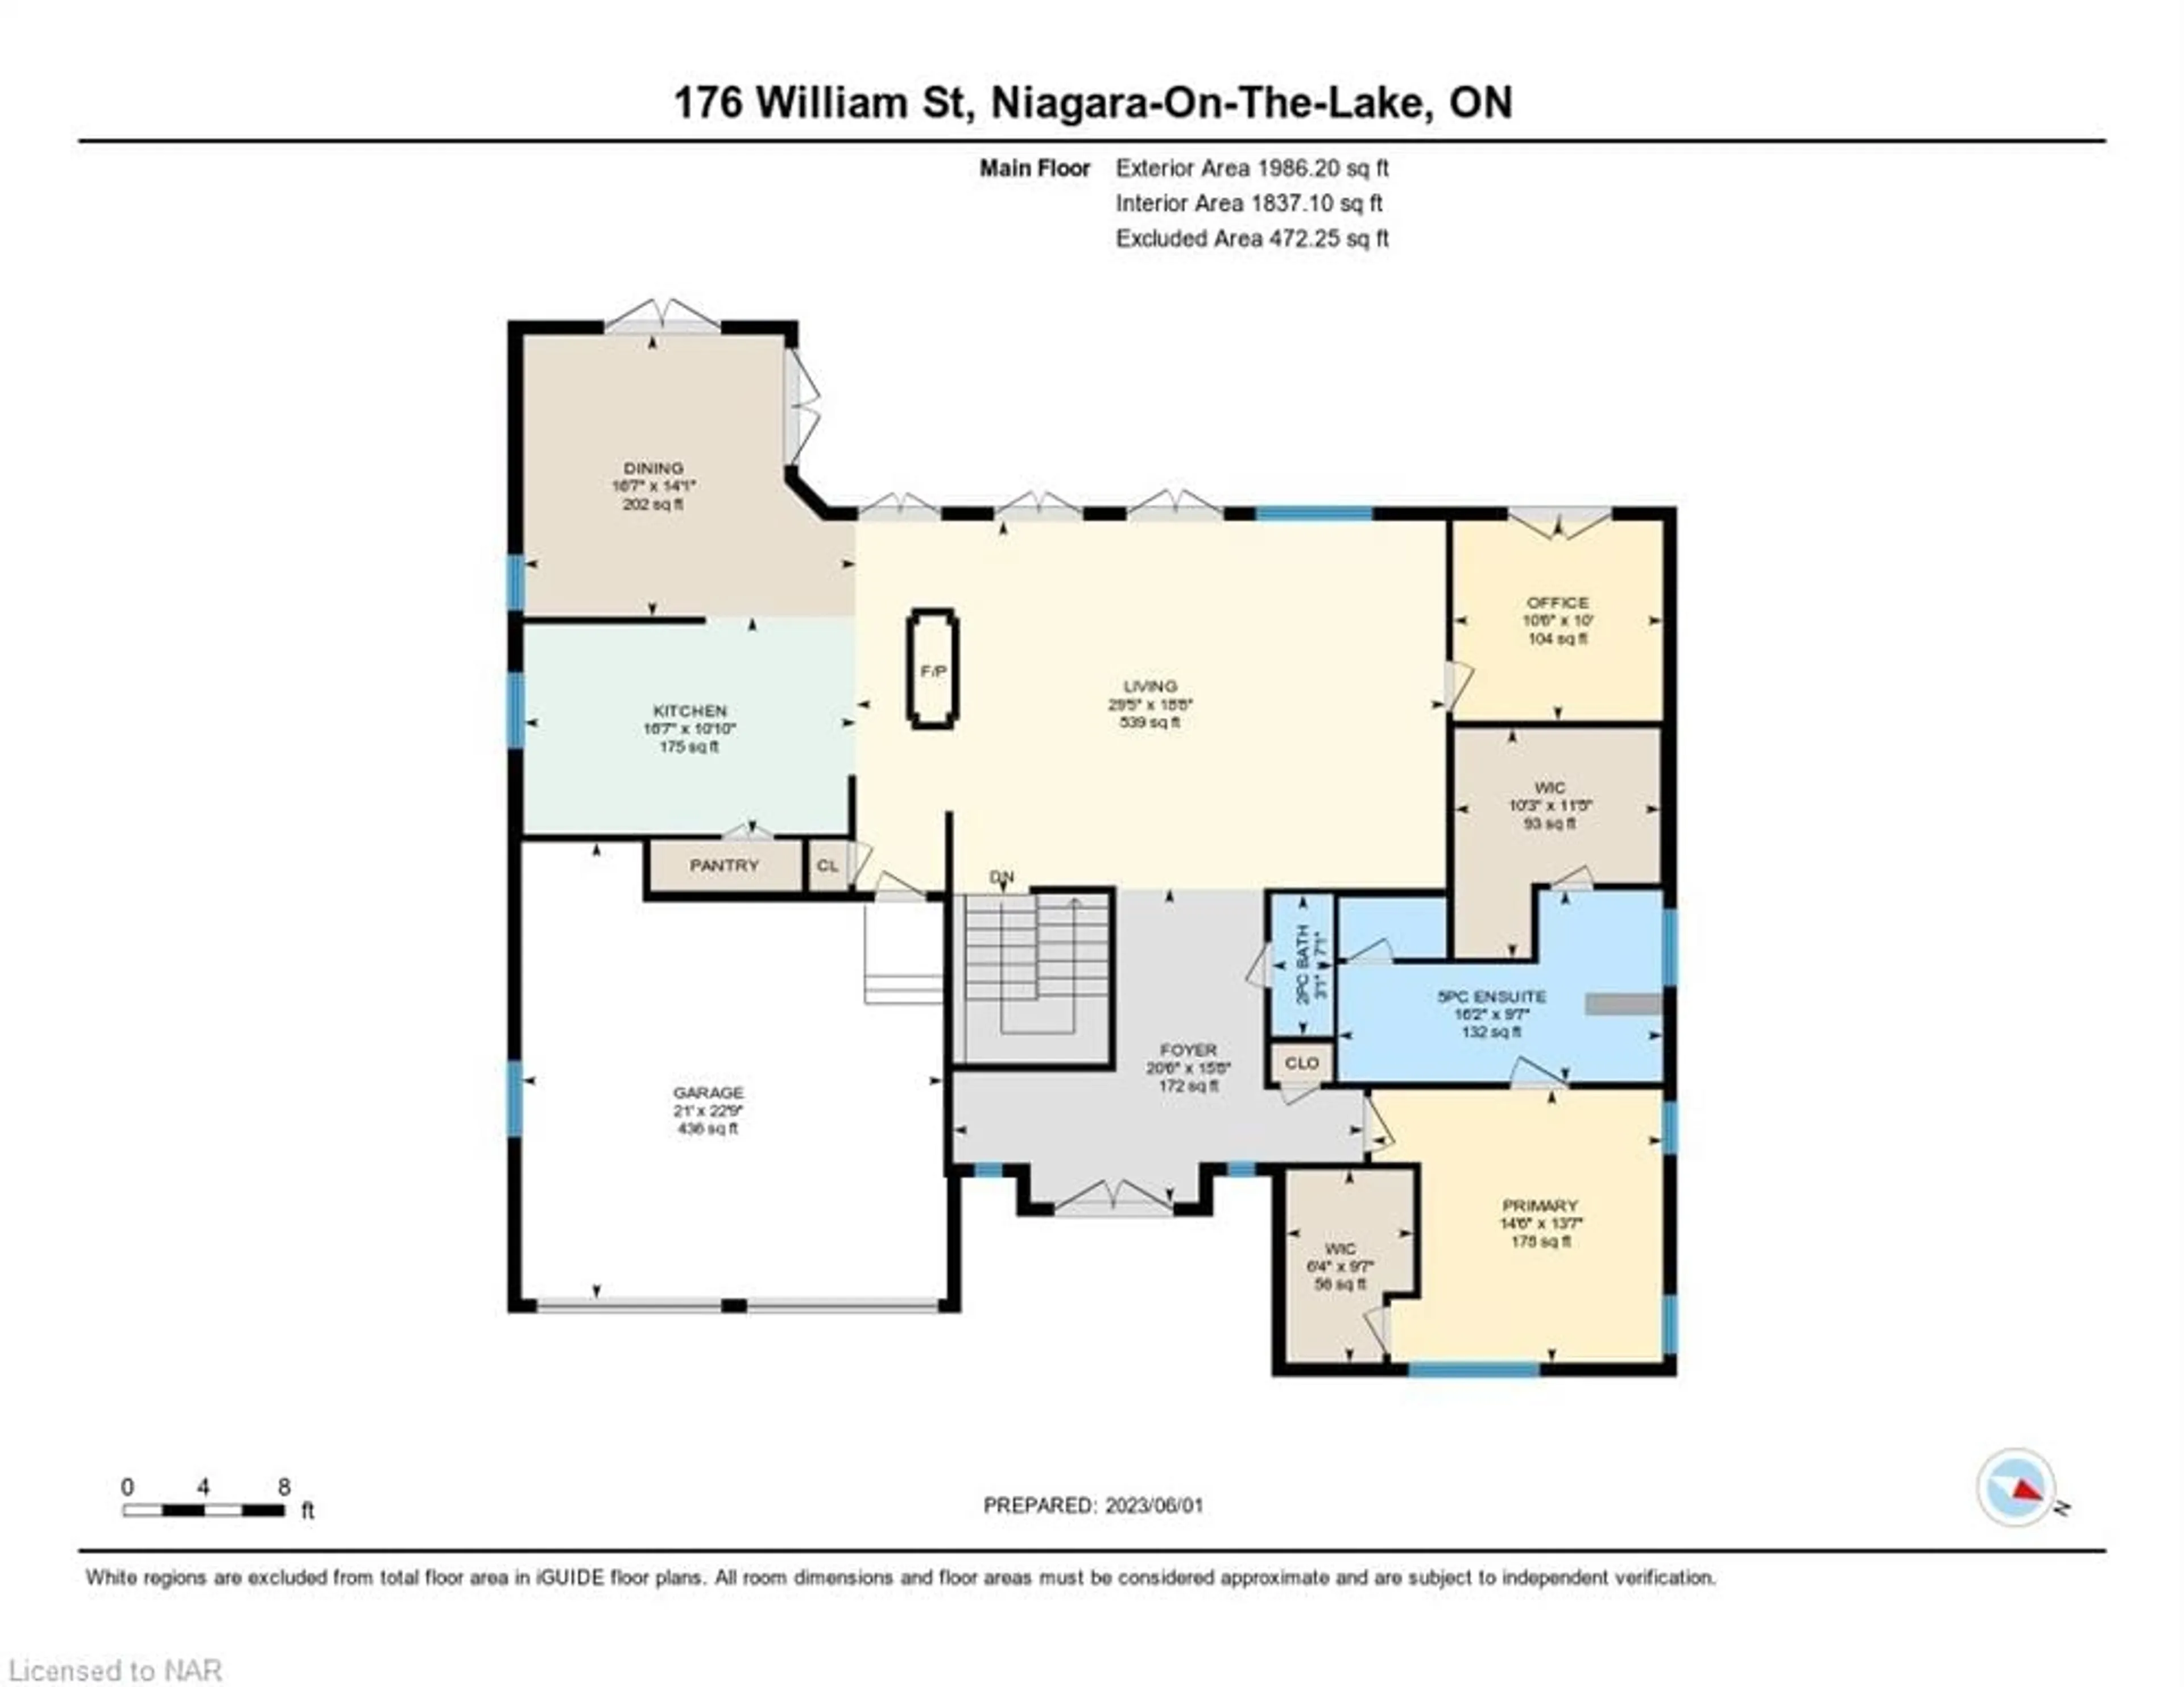 Floor plan for 176 William St, Niagara-on-the-Lake Ontario L0S 1J0